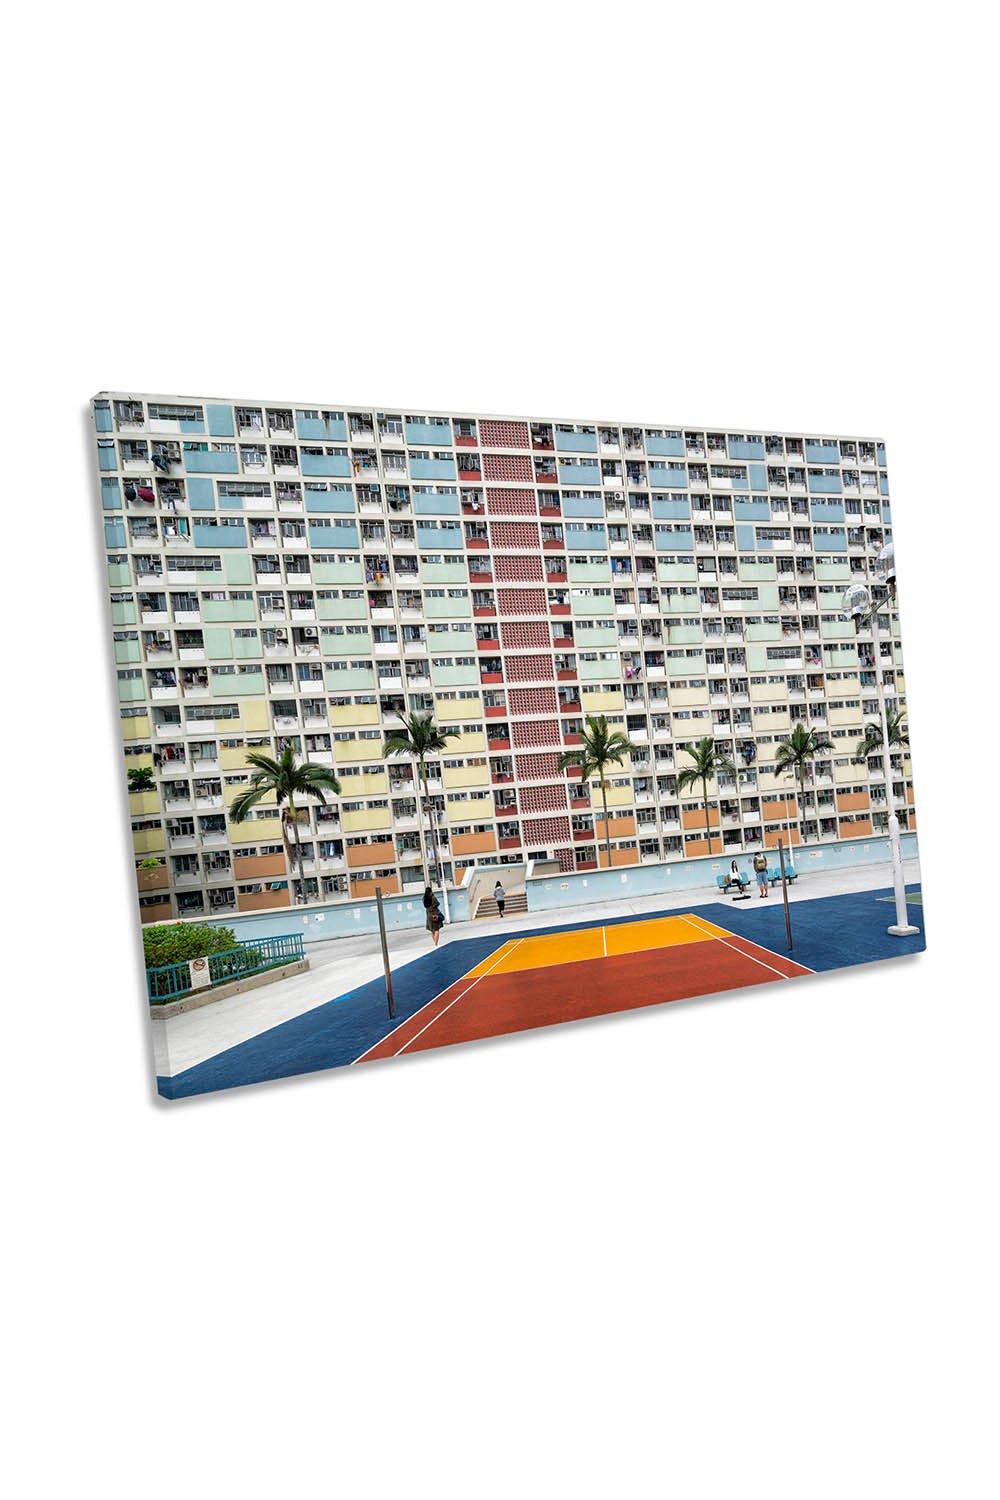 Choi Hung Estate Basketball Hong Kong Architecture Canvas Wall Art Picture Print